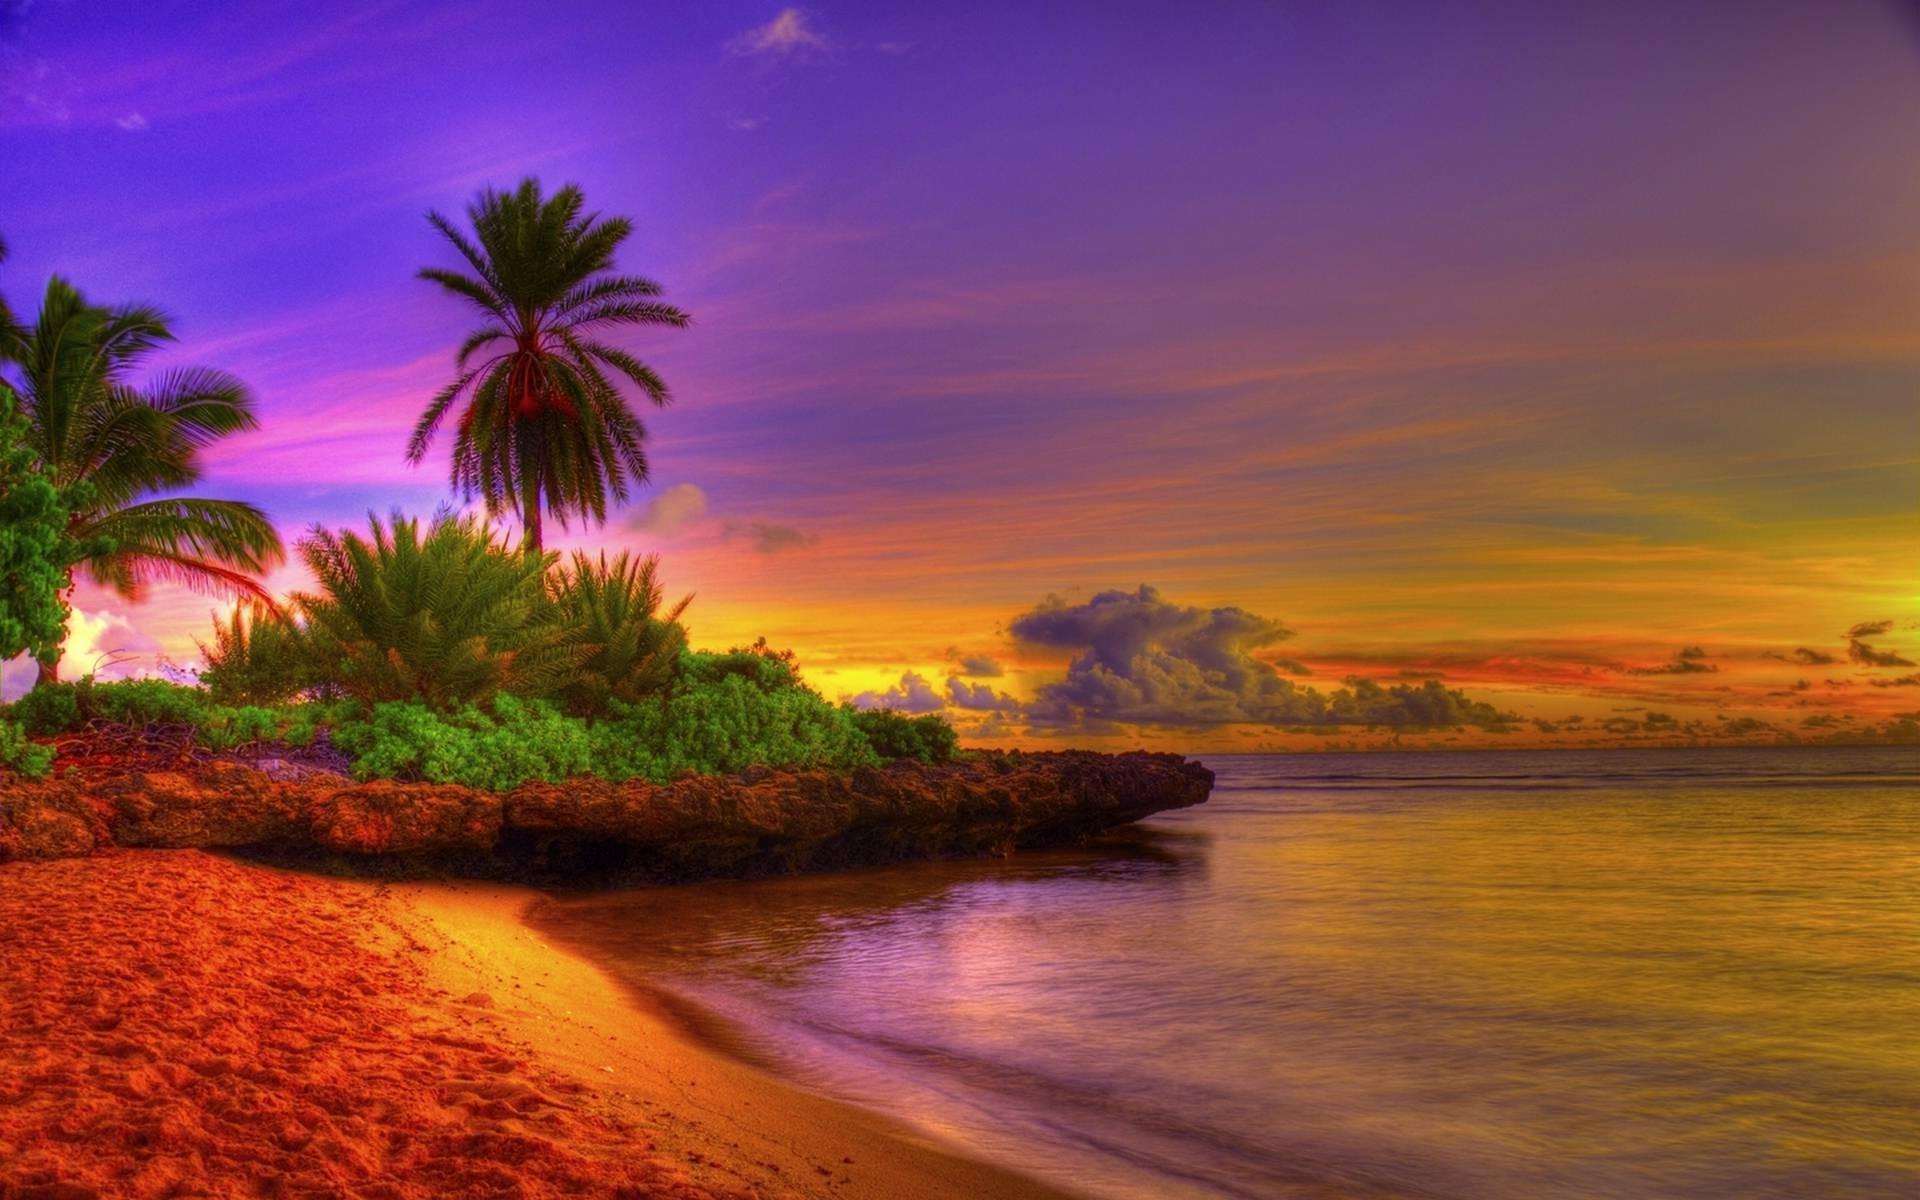 Colorful Sunrise Tropical Beach Image Beach Sunset